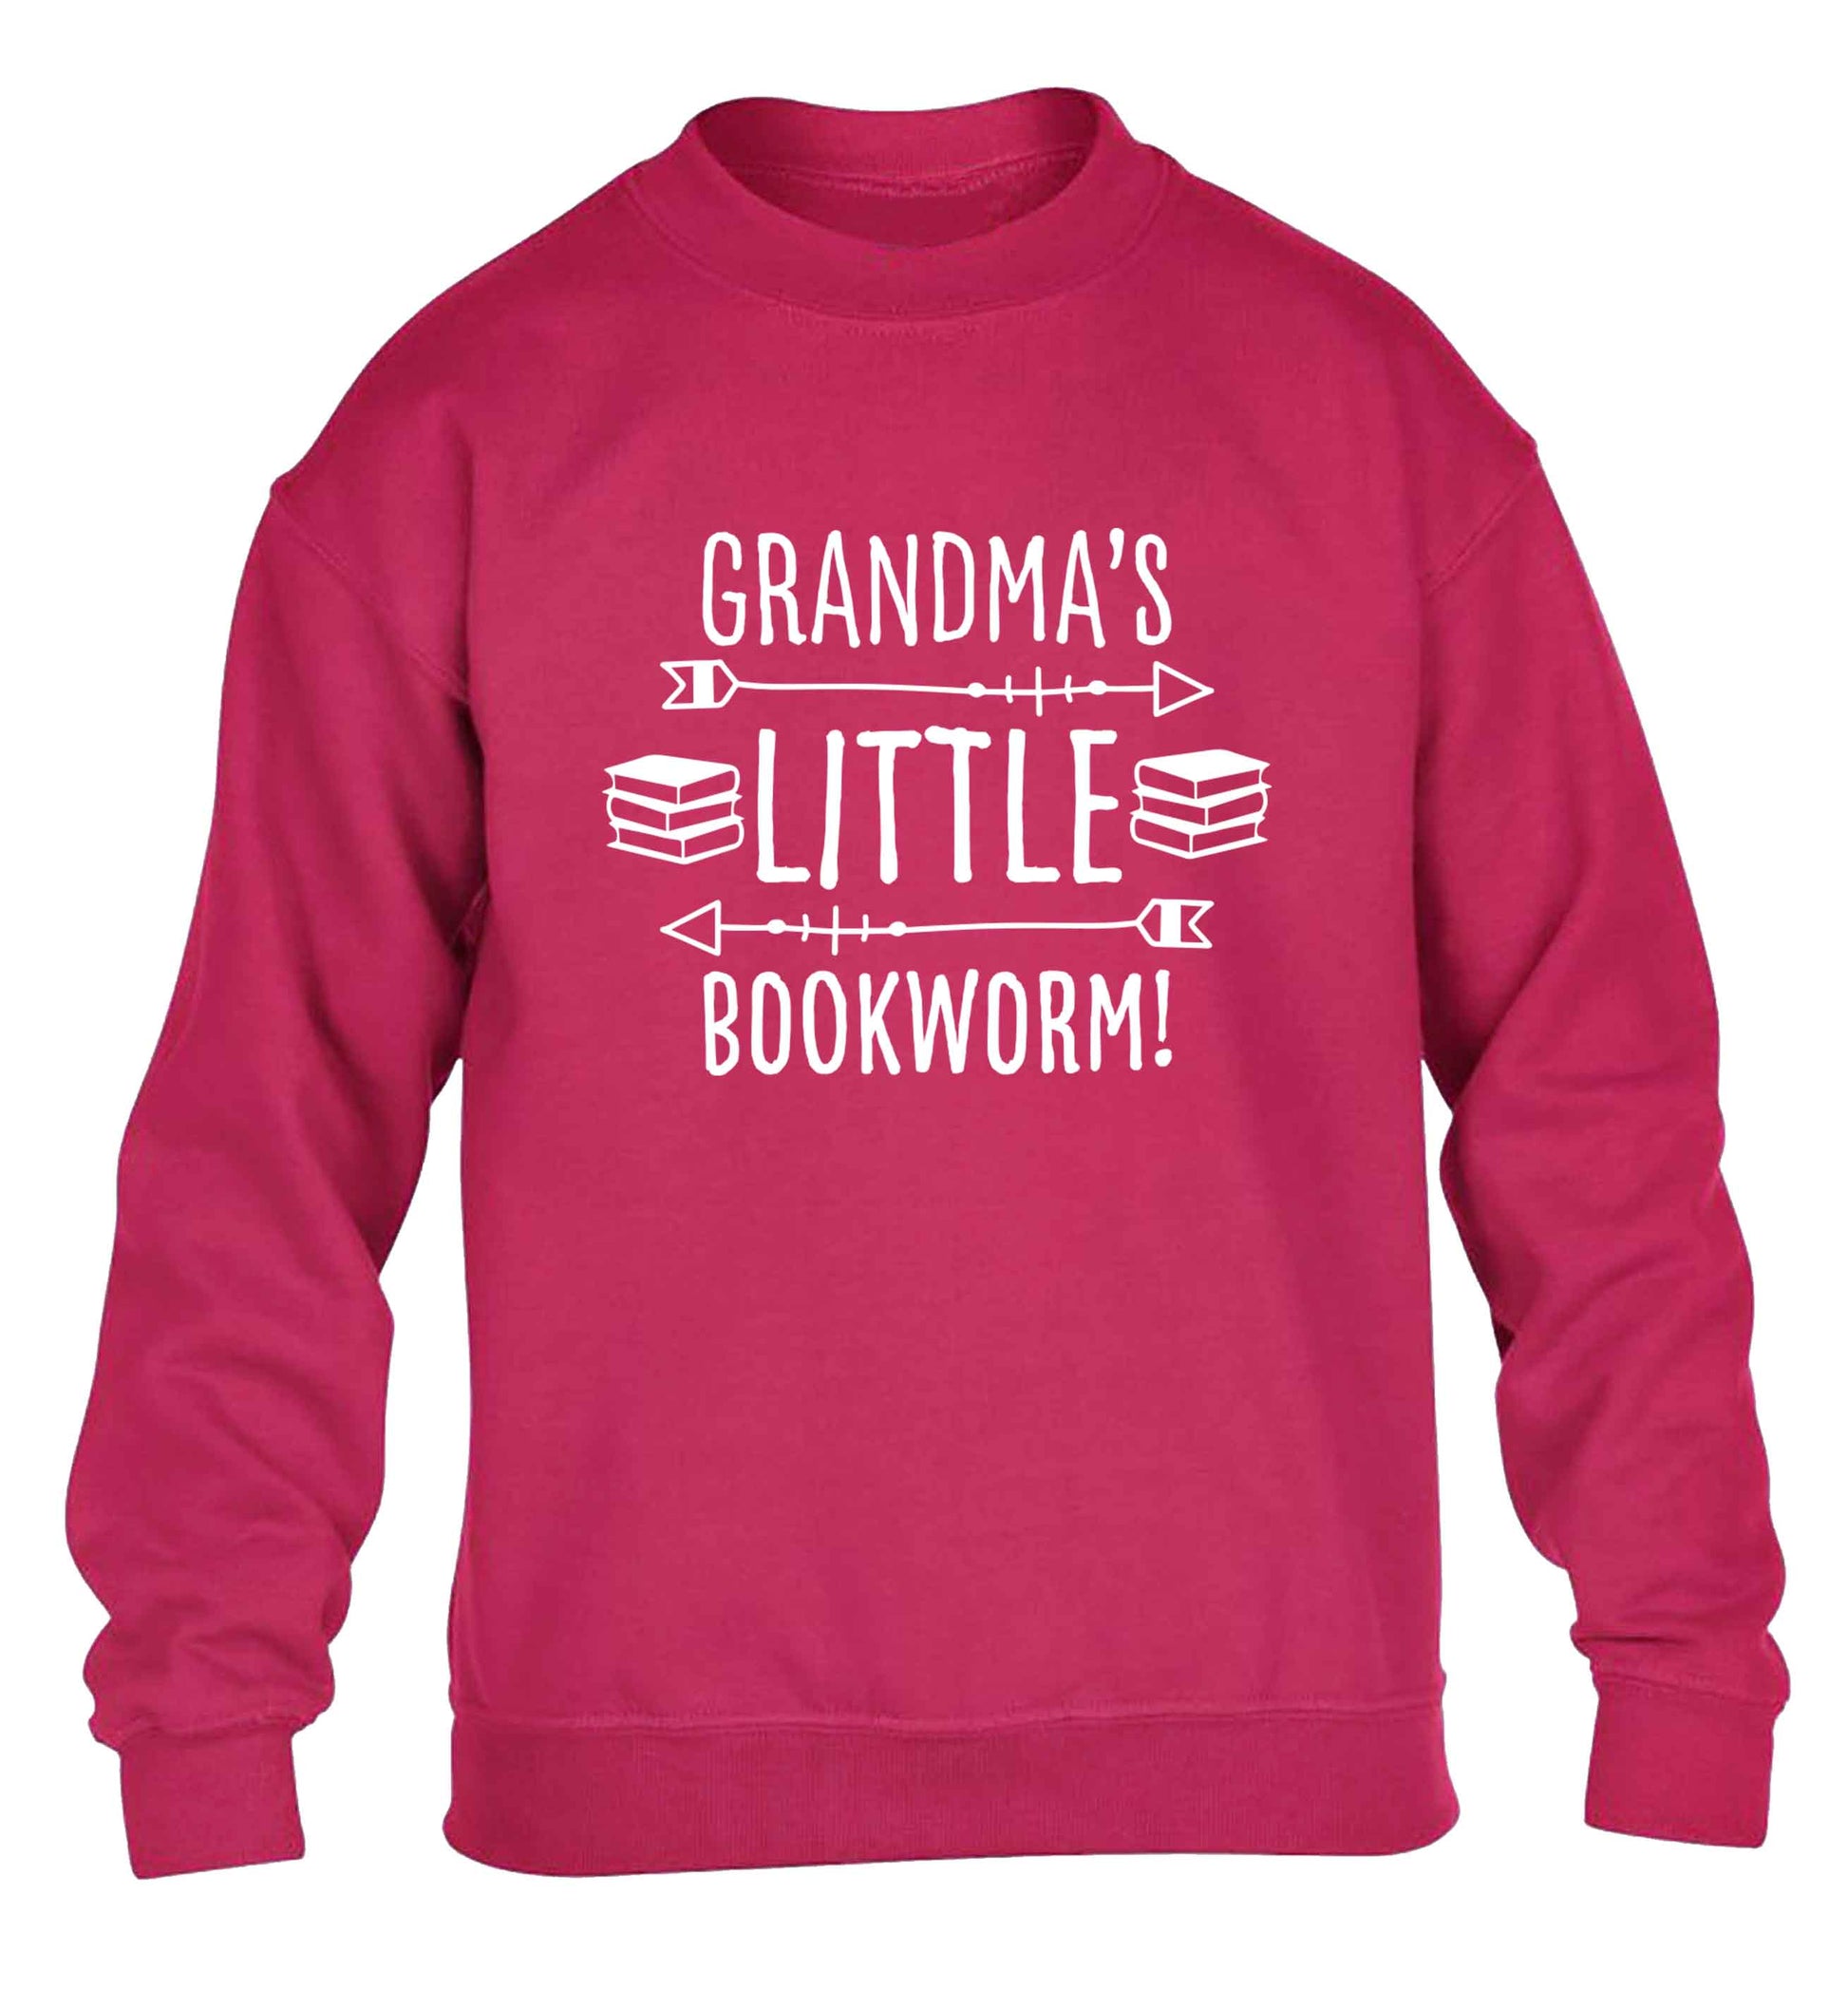 Grandma's little bookworm children's pink sweater 12-13 Years